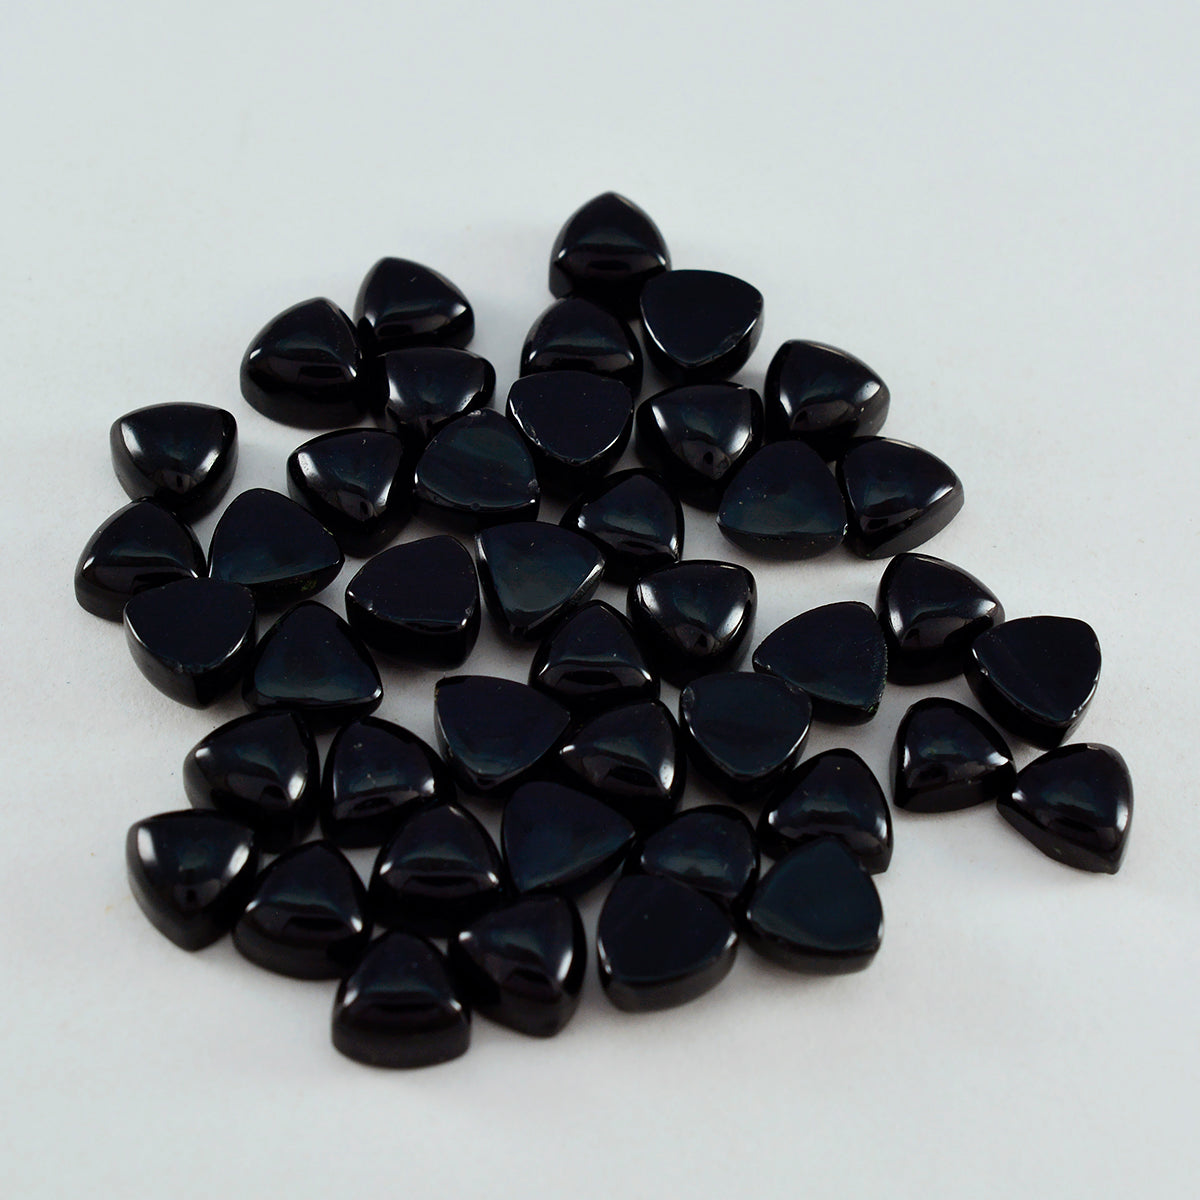 Riyogems 1PC Black Onyx Cabochon 5x5 mm Trillion Shape cute Quality Loose Stone